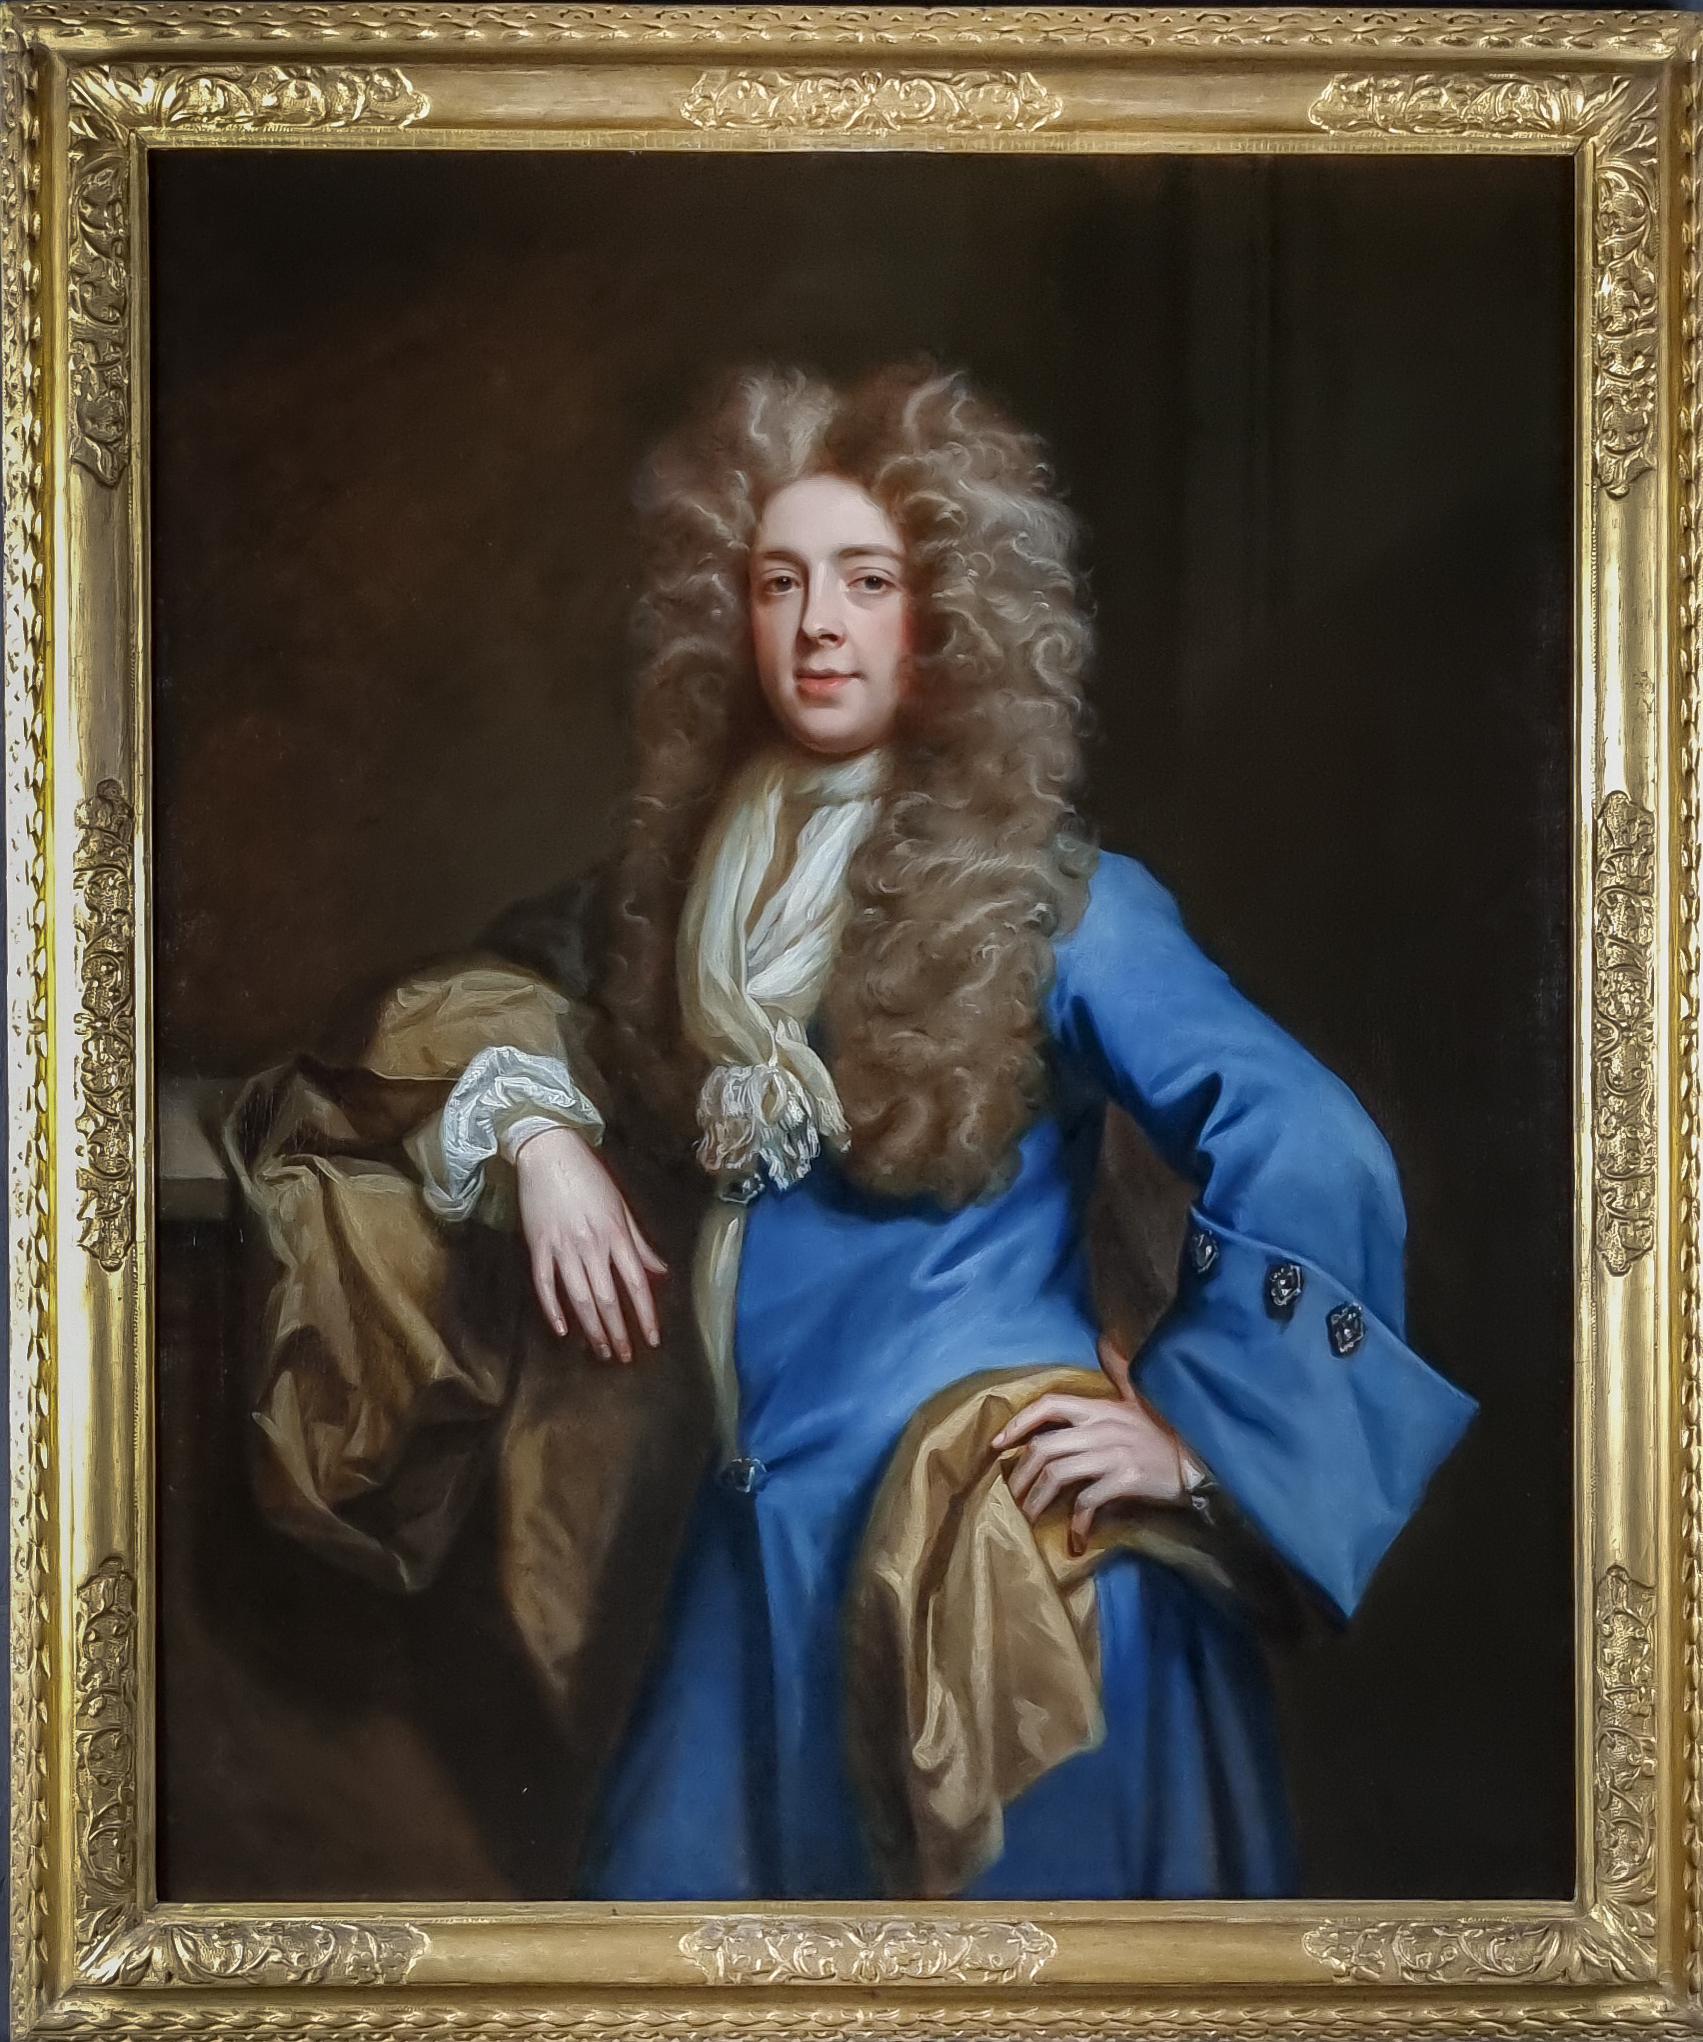 Portrait of a Gentleman, John Packer in Blue Coat with Diamonds, Oil Painting